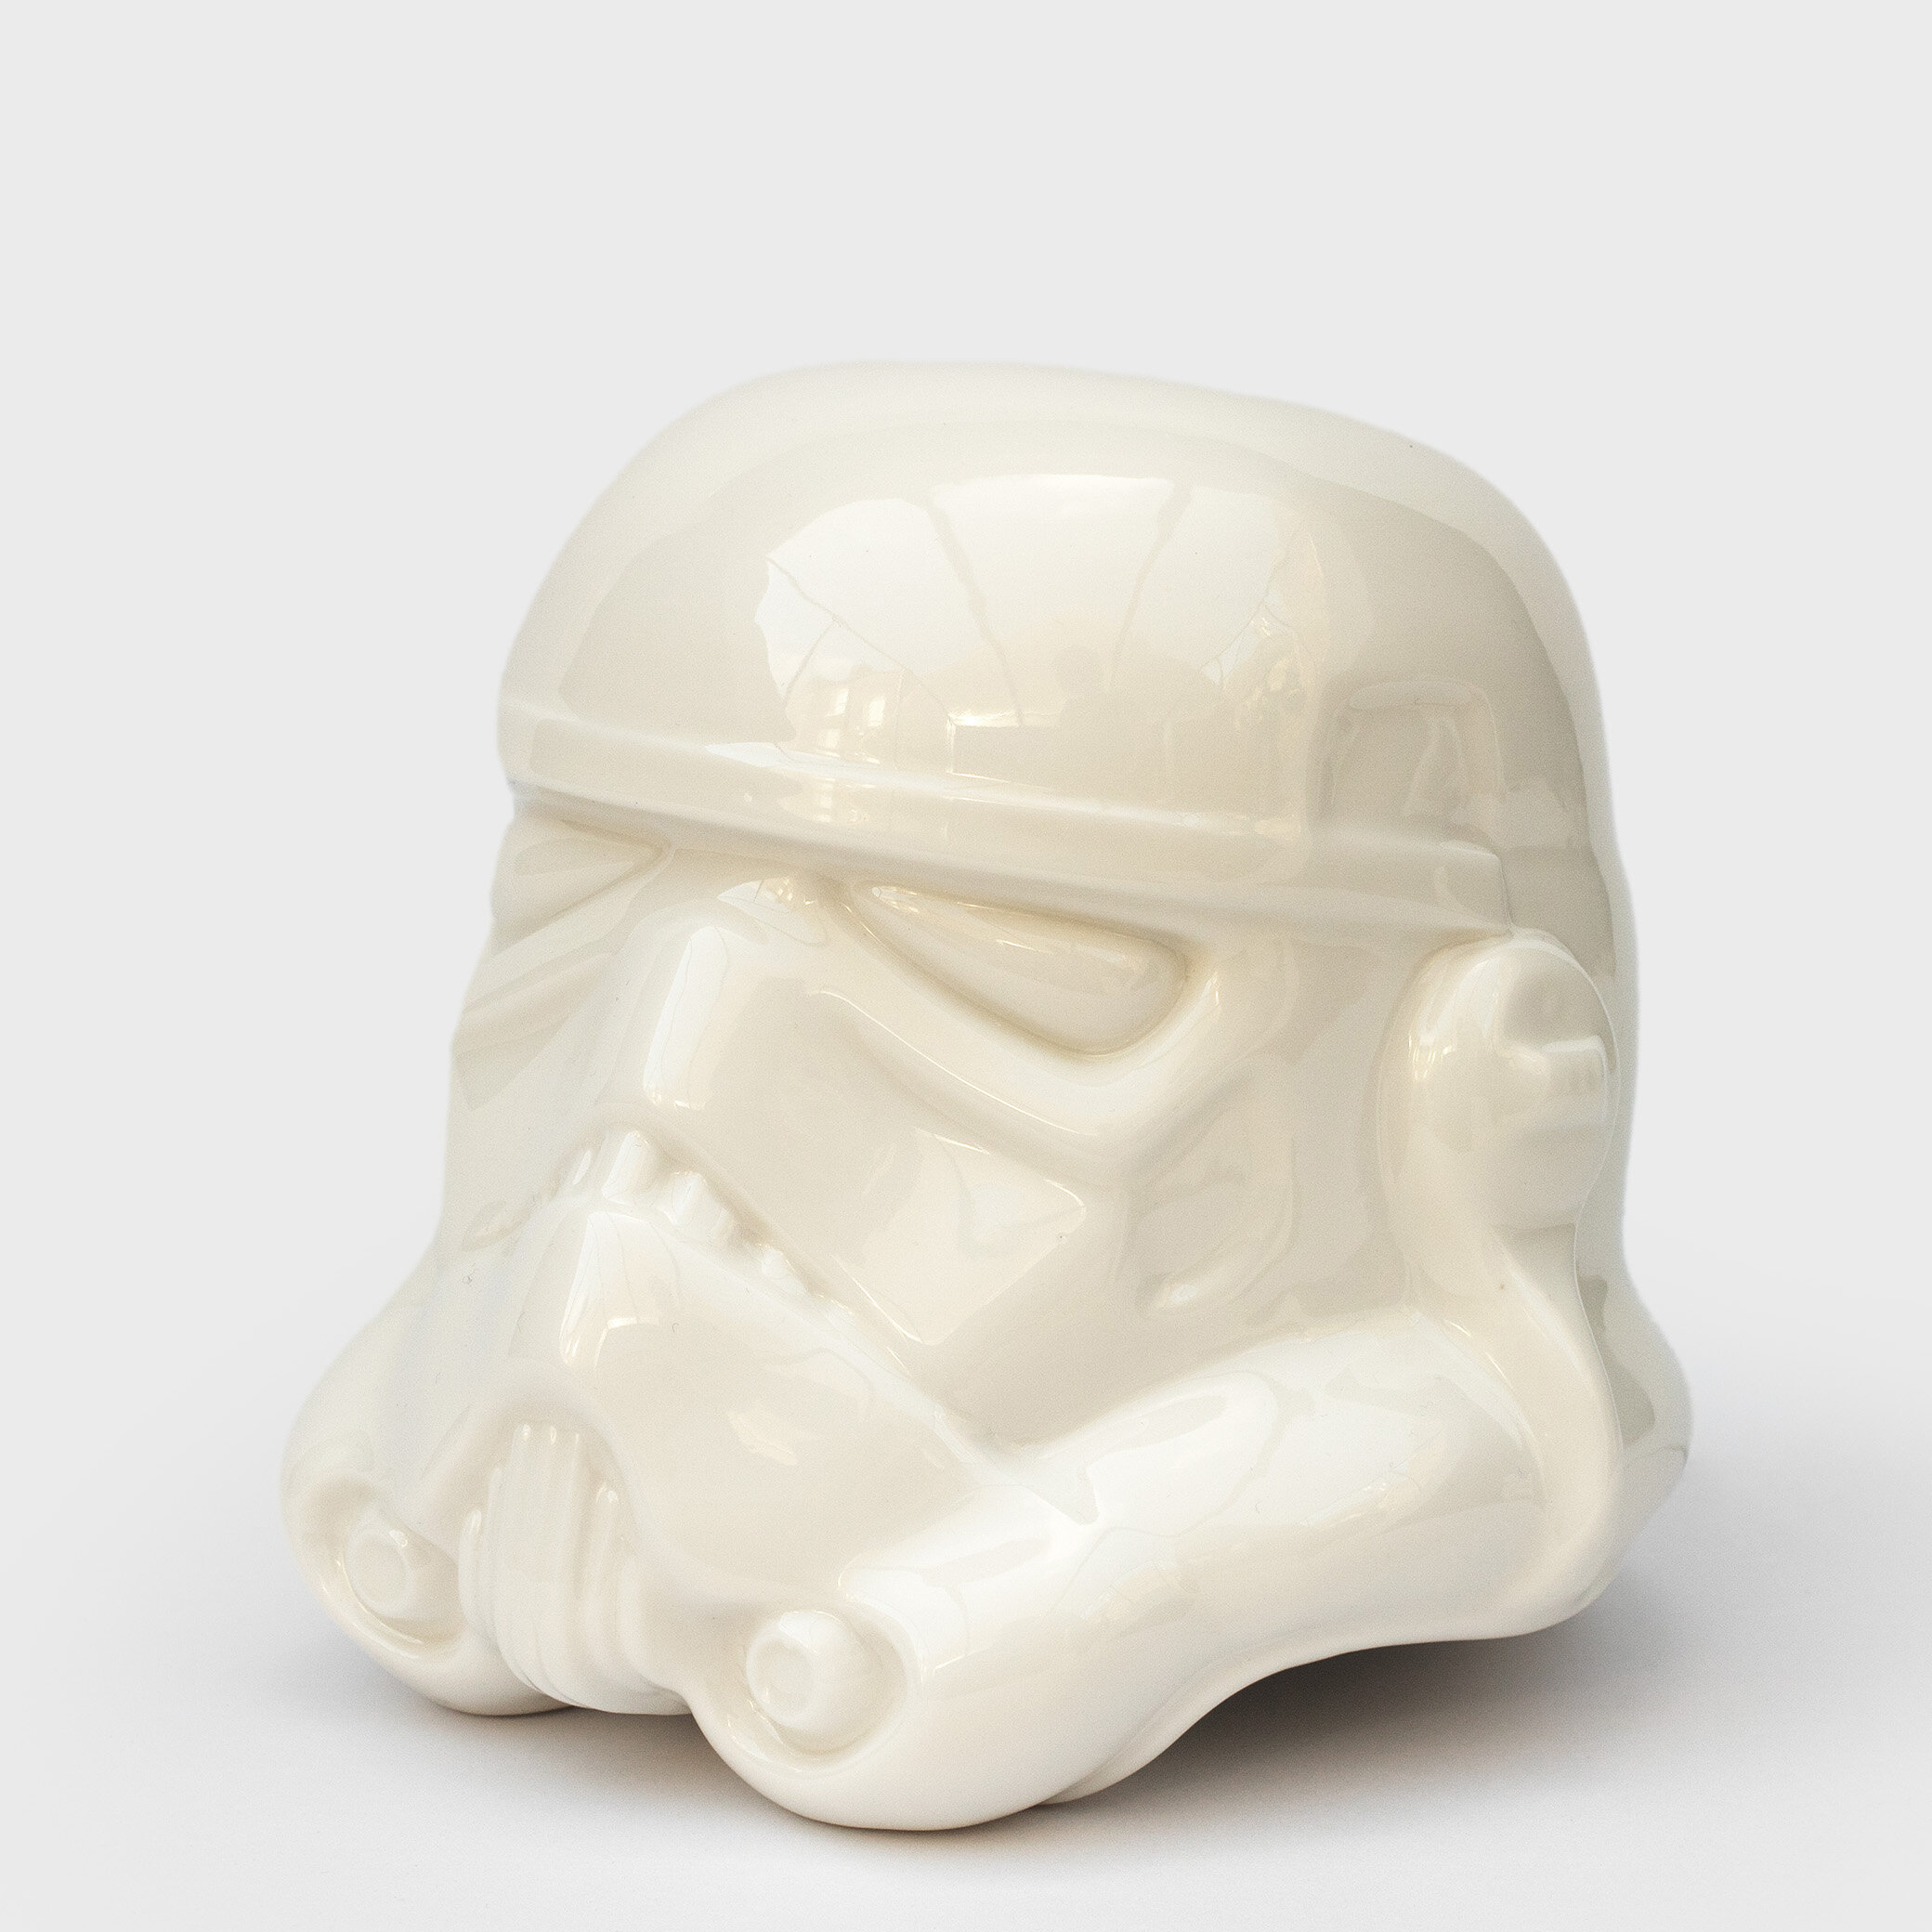 Replica Stormtrooper Helmet Lamp (Limited Edition)